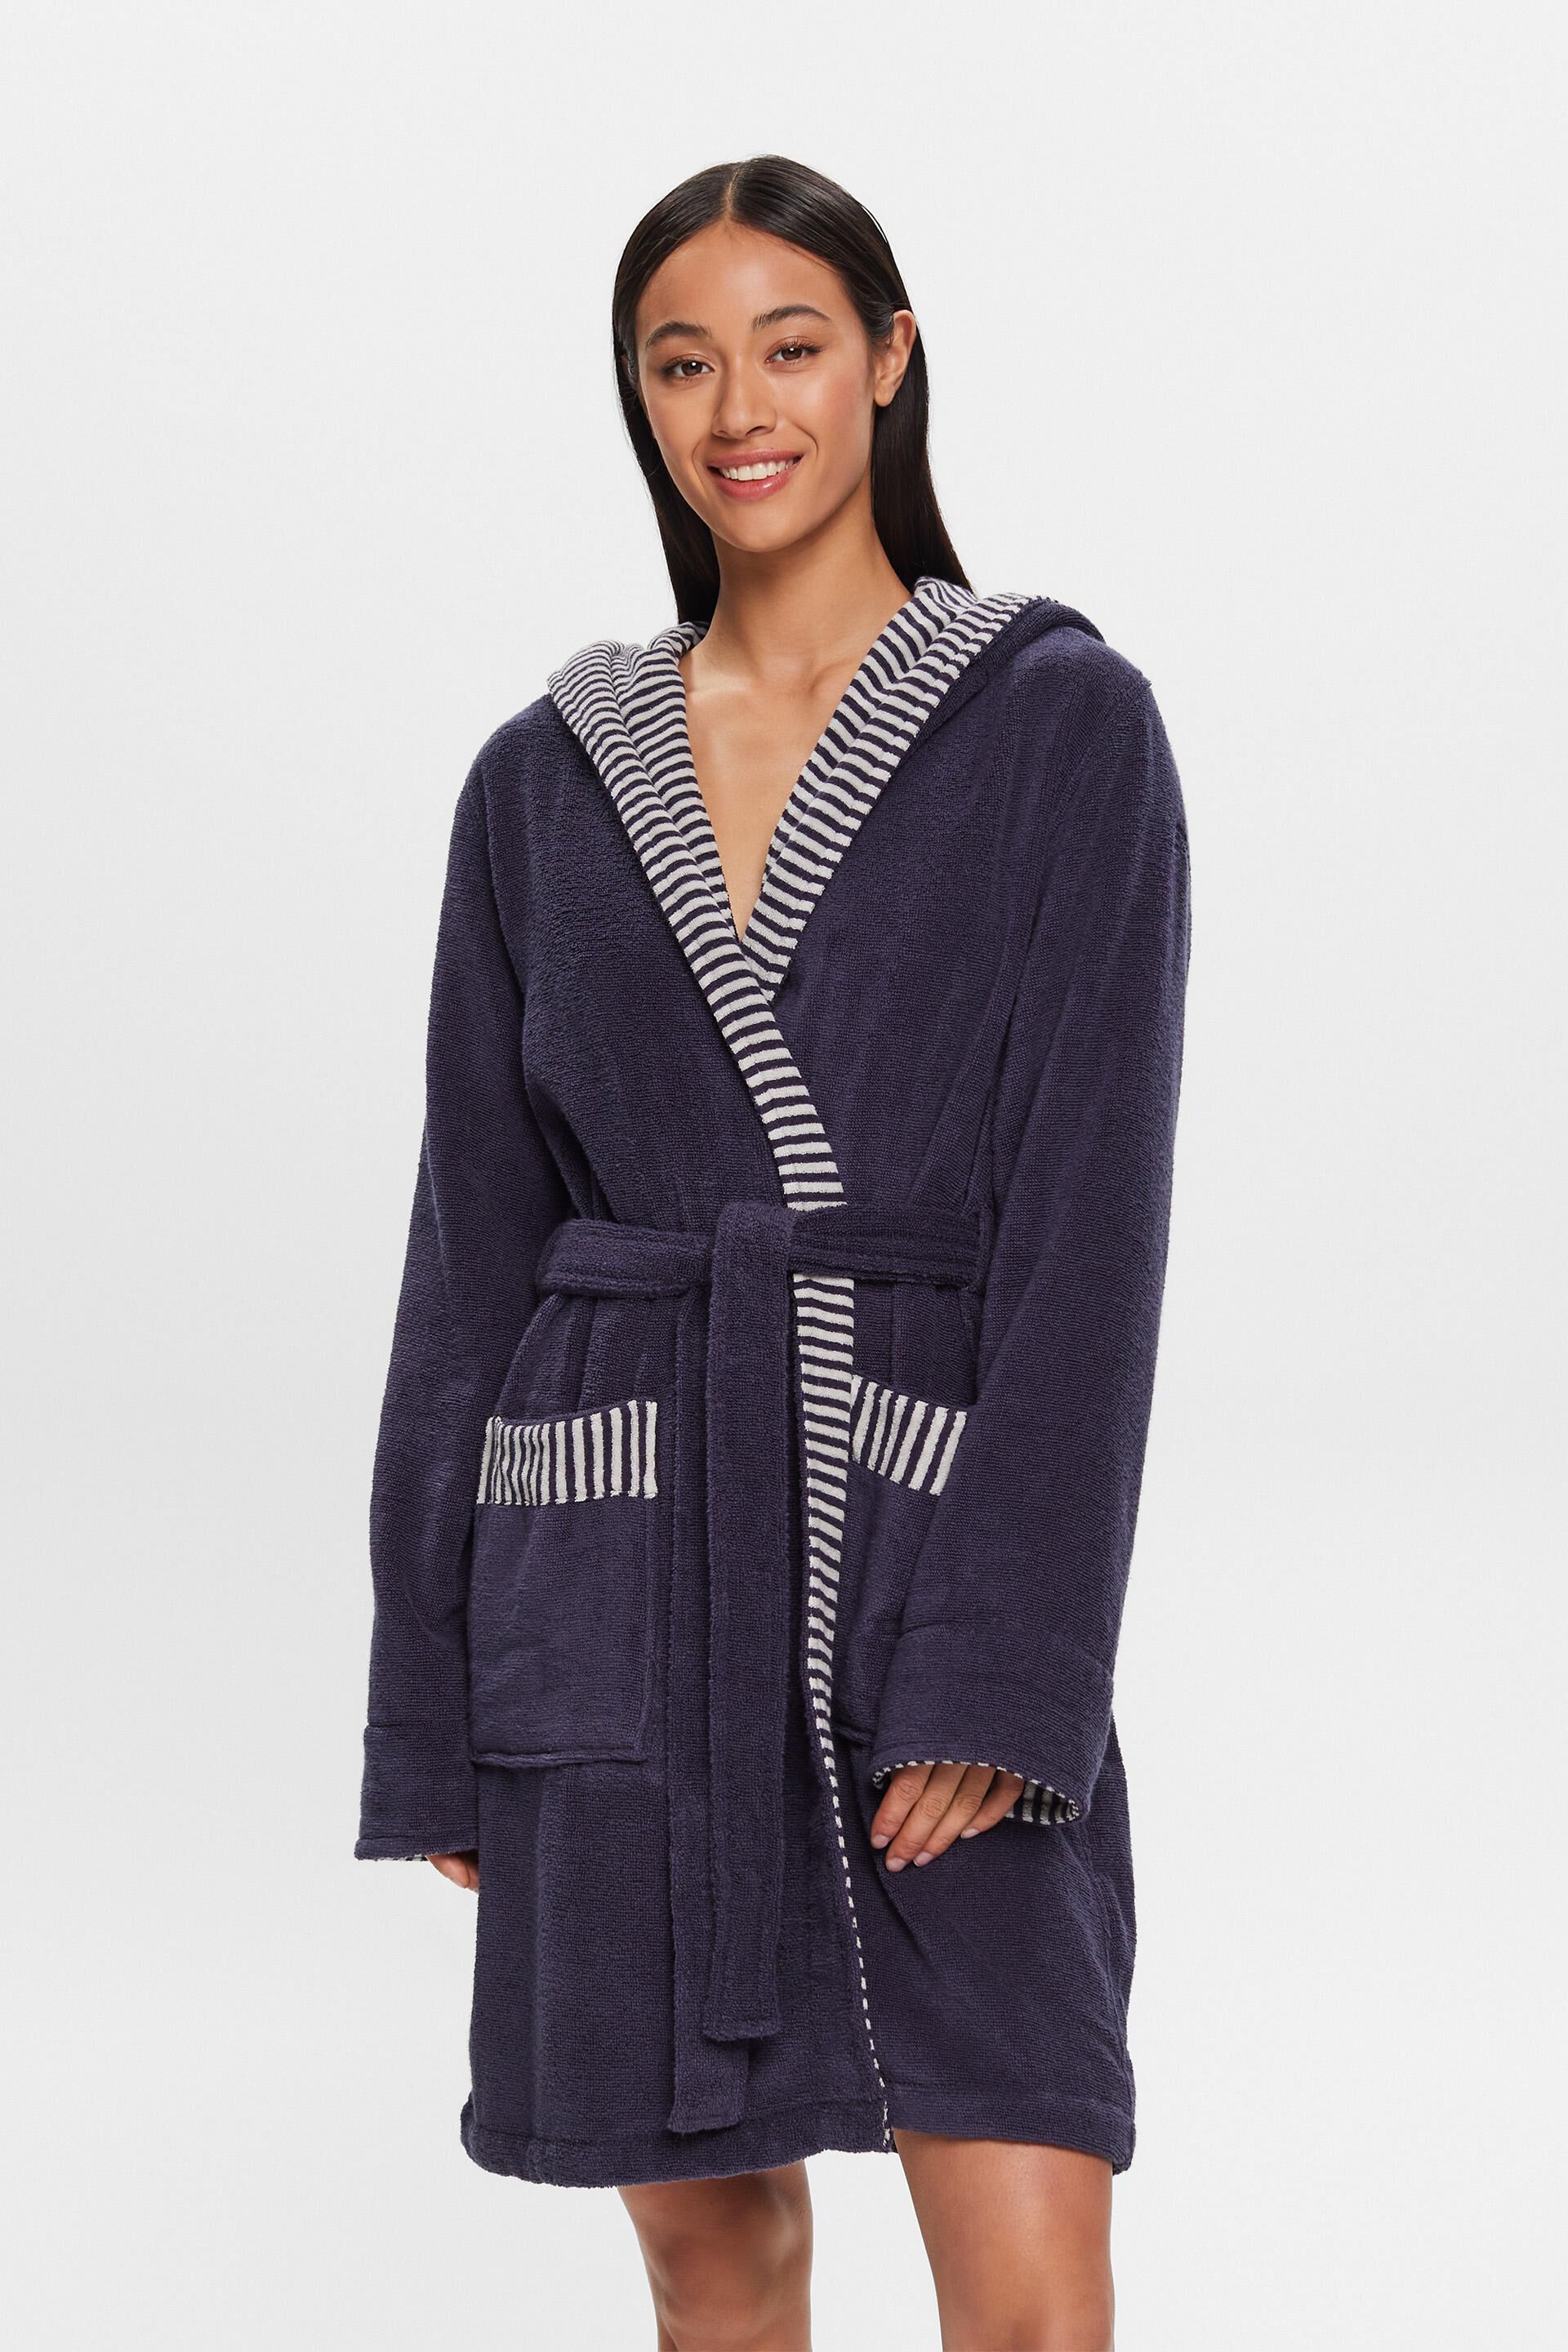 Terry Cloth Robe - Bathrobe For Women | RobesNmore